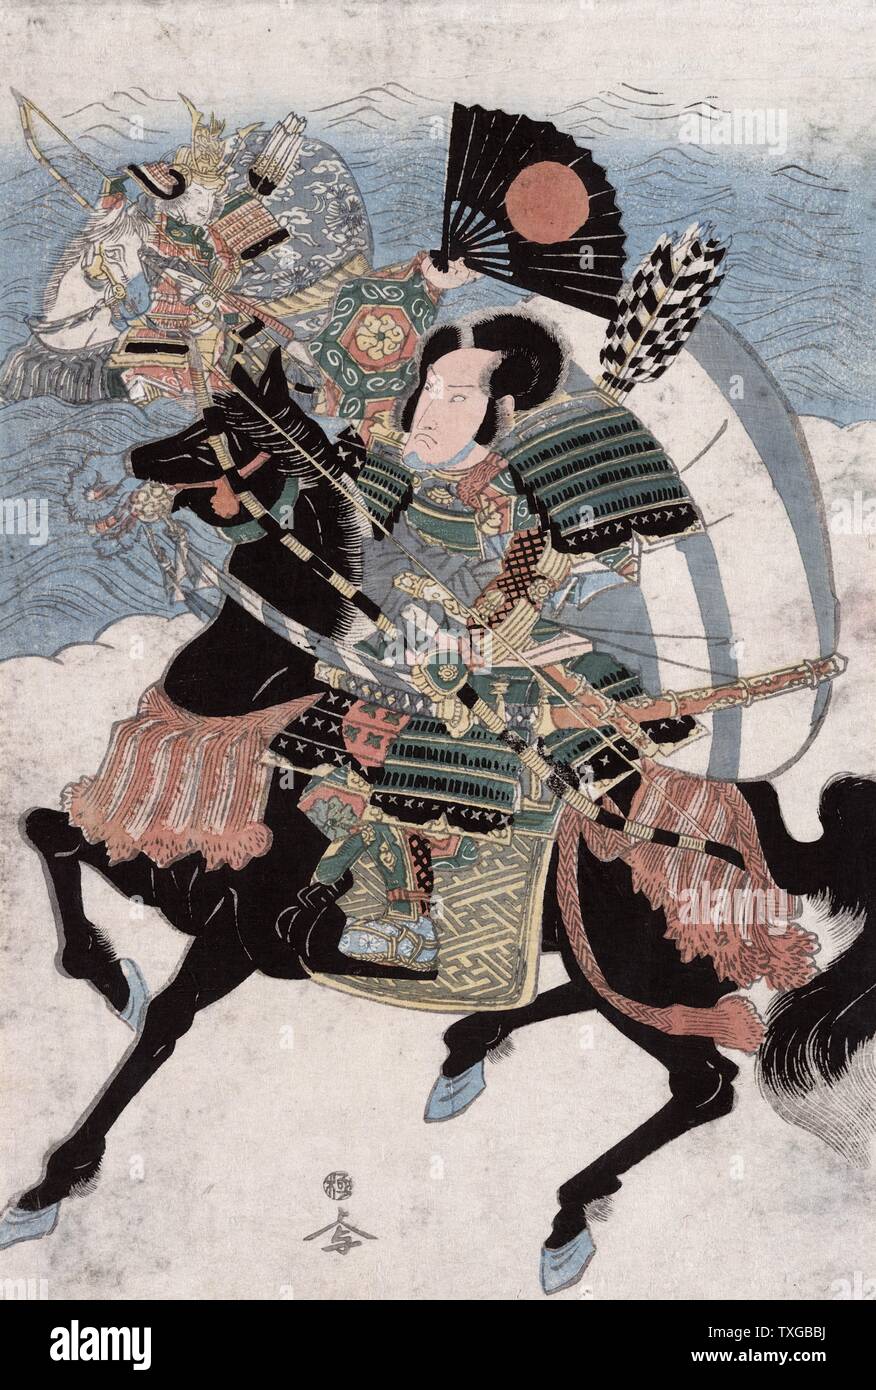 The warriors Kumagai Naozane and Taira no Atsumori. Print shows two warriors on horseback with bow and arrows. Stock Photo